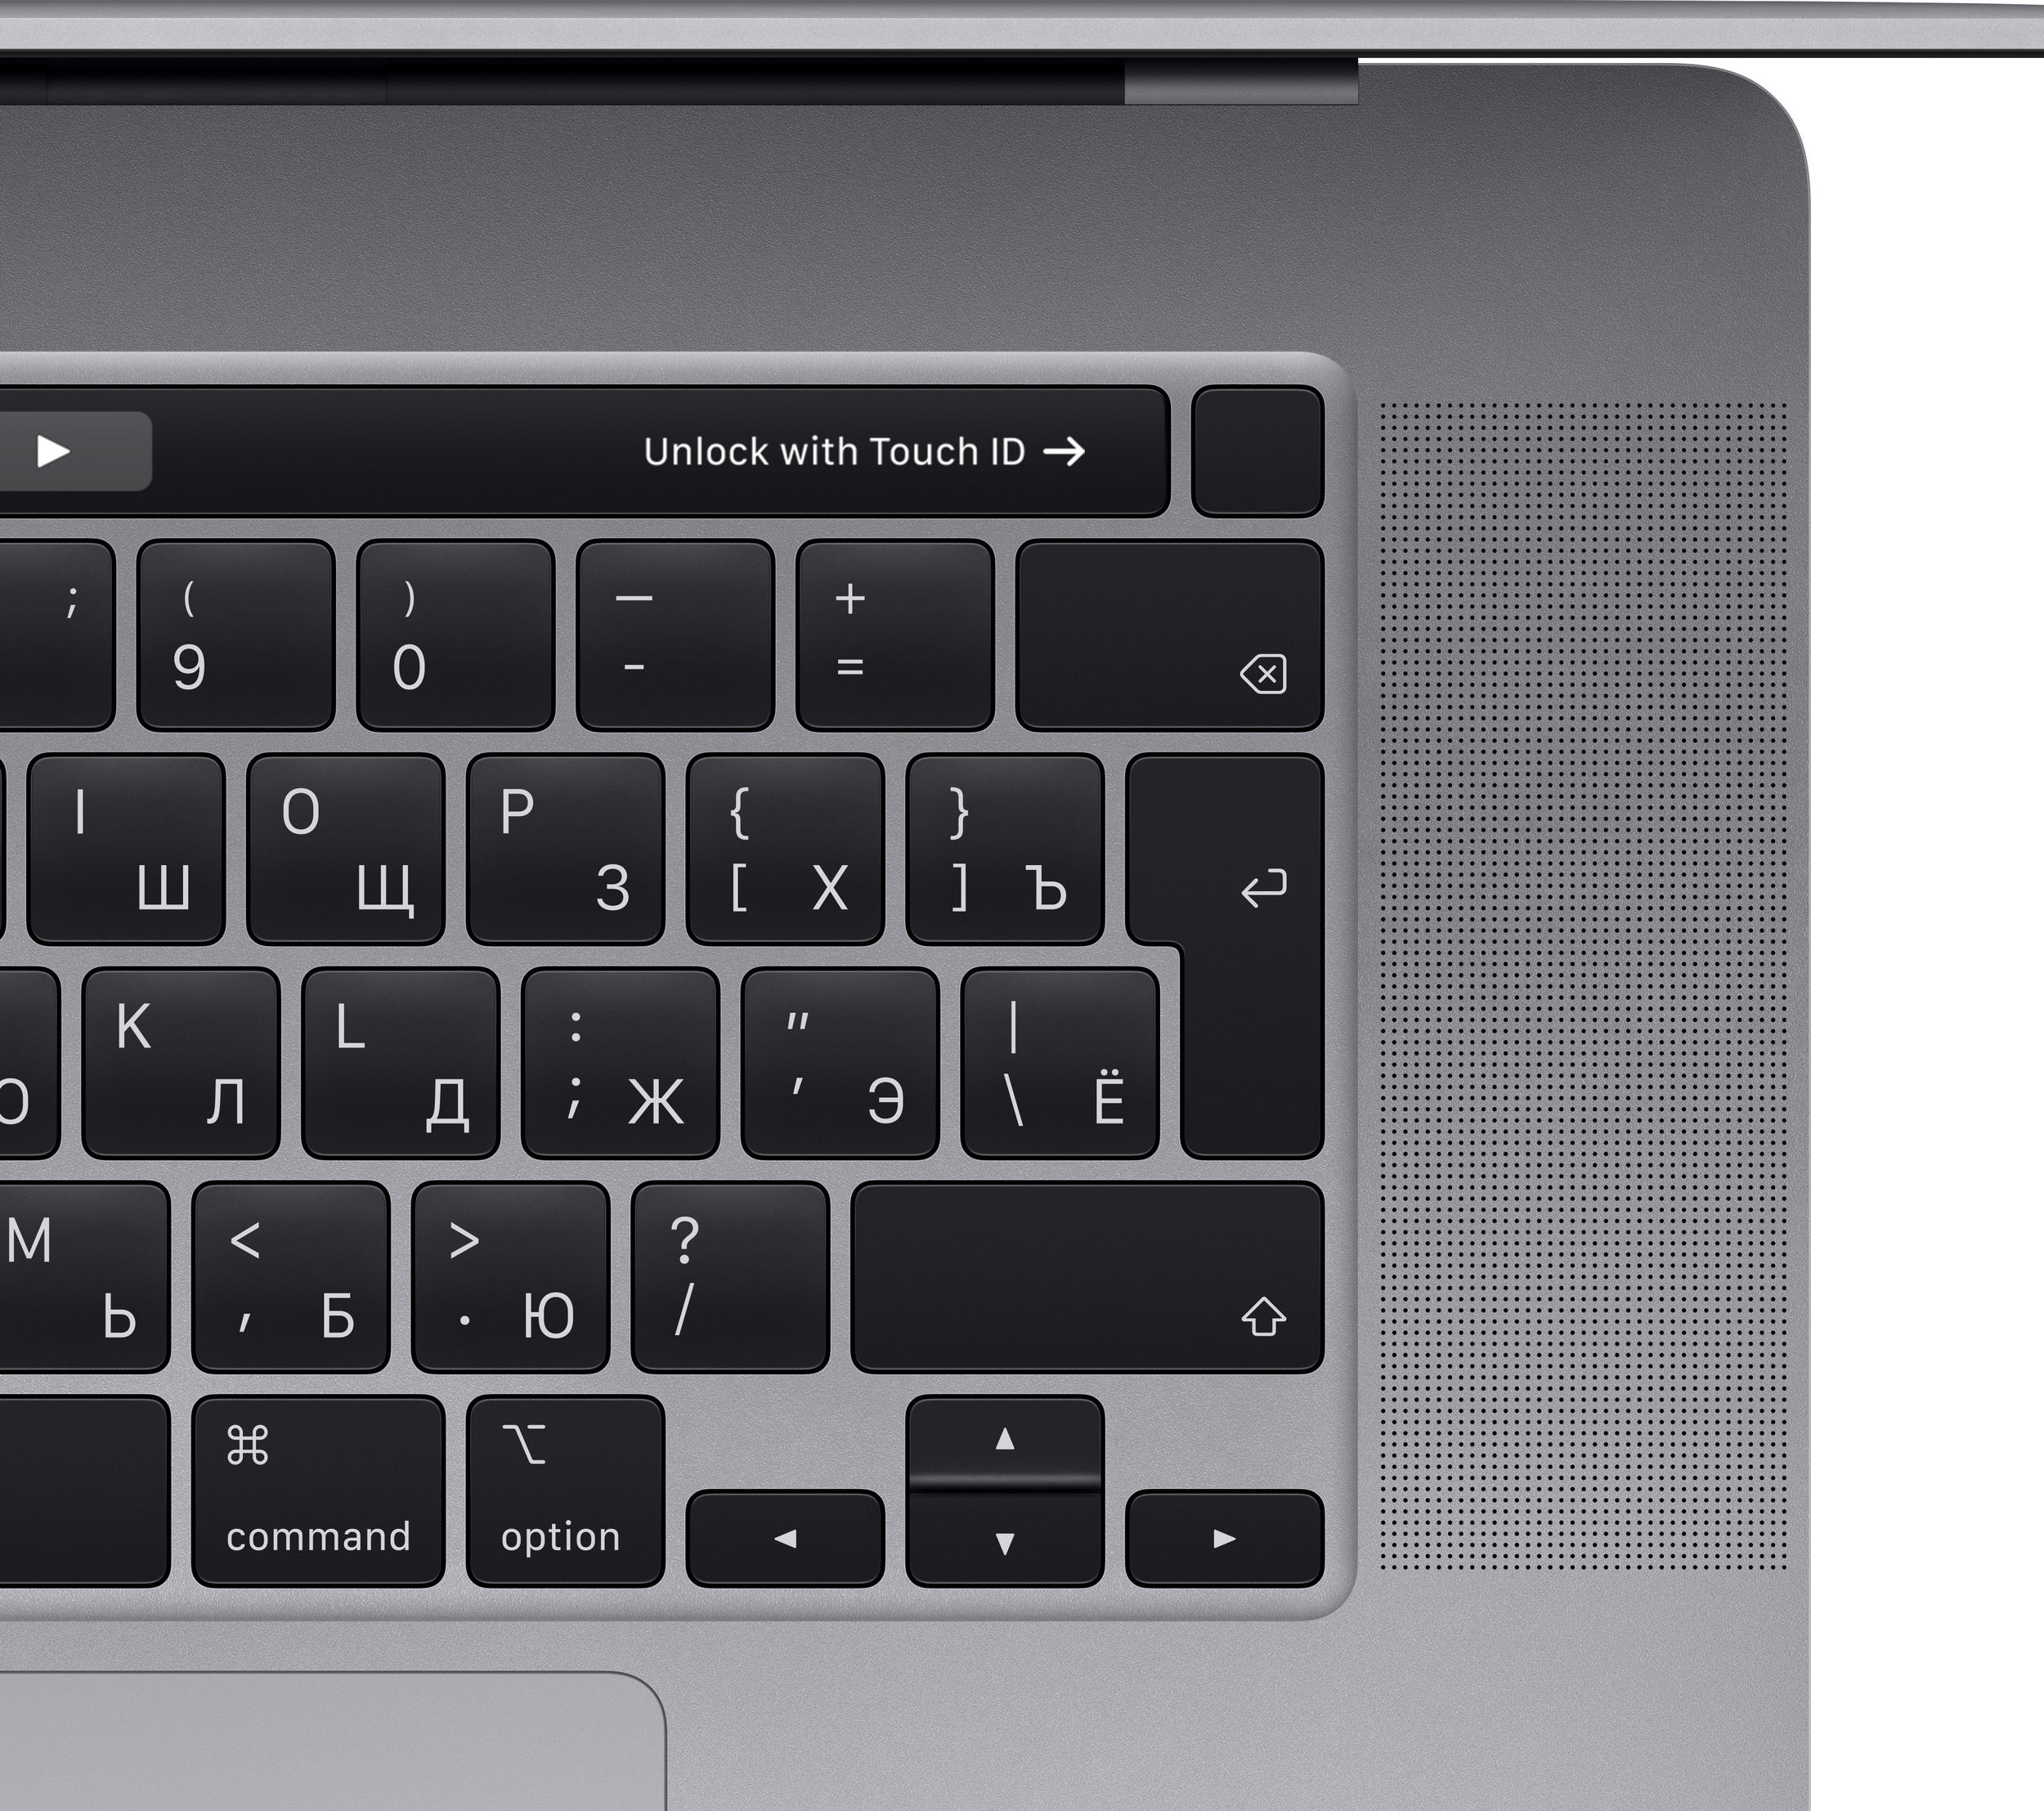 Фото — Apple MacBook Pro 16" 8 Core i9 2,4 ГГц, 64 ГБ, 2 ТБ SSD, Radeon Pro 5500M, Touch Bar,«серый космос»